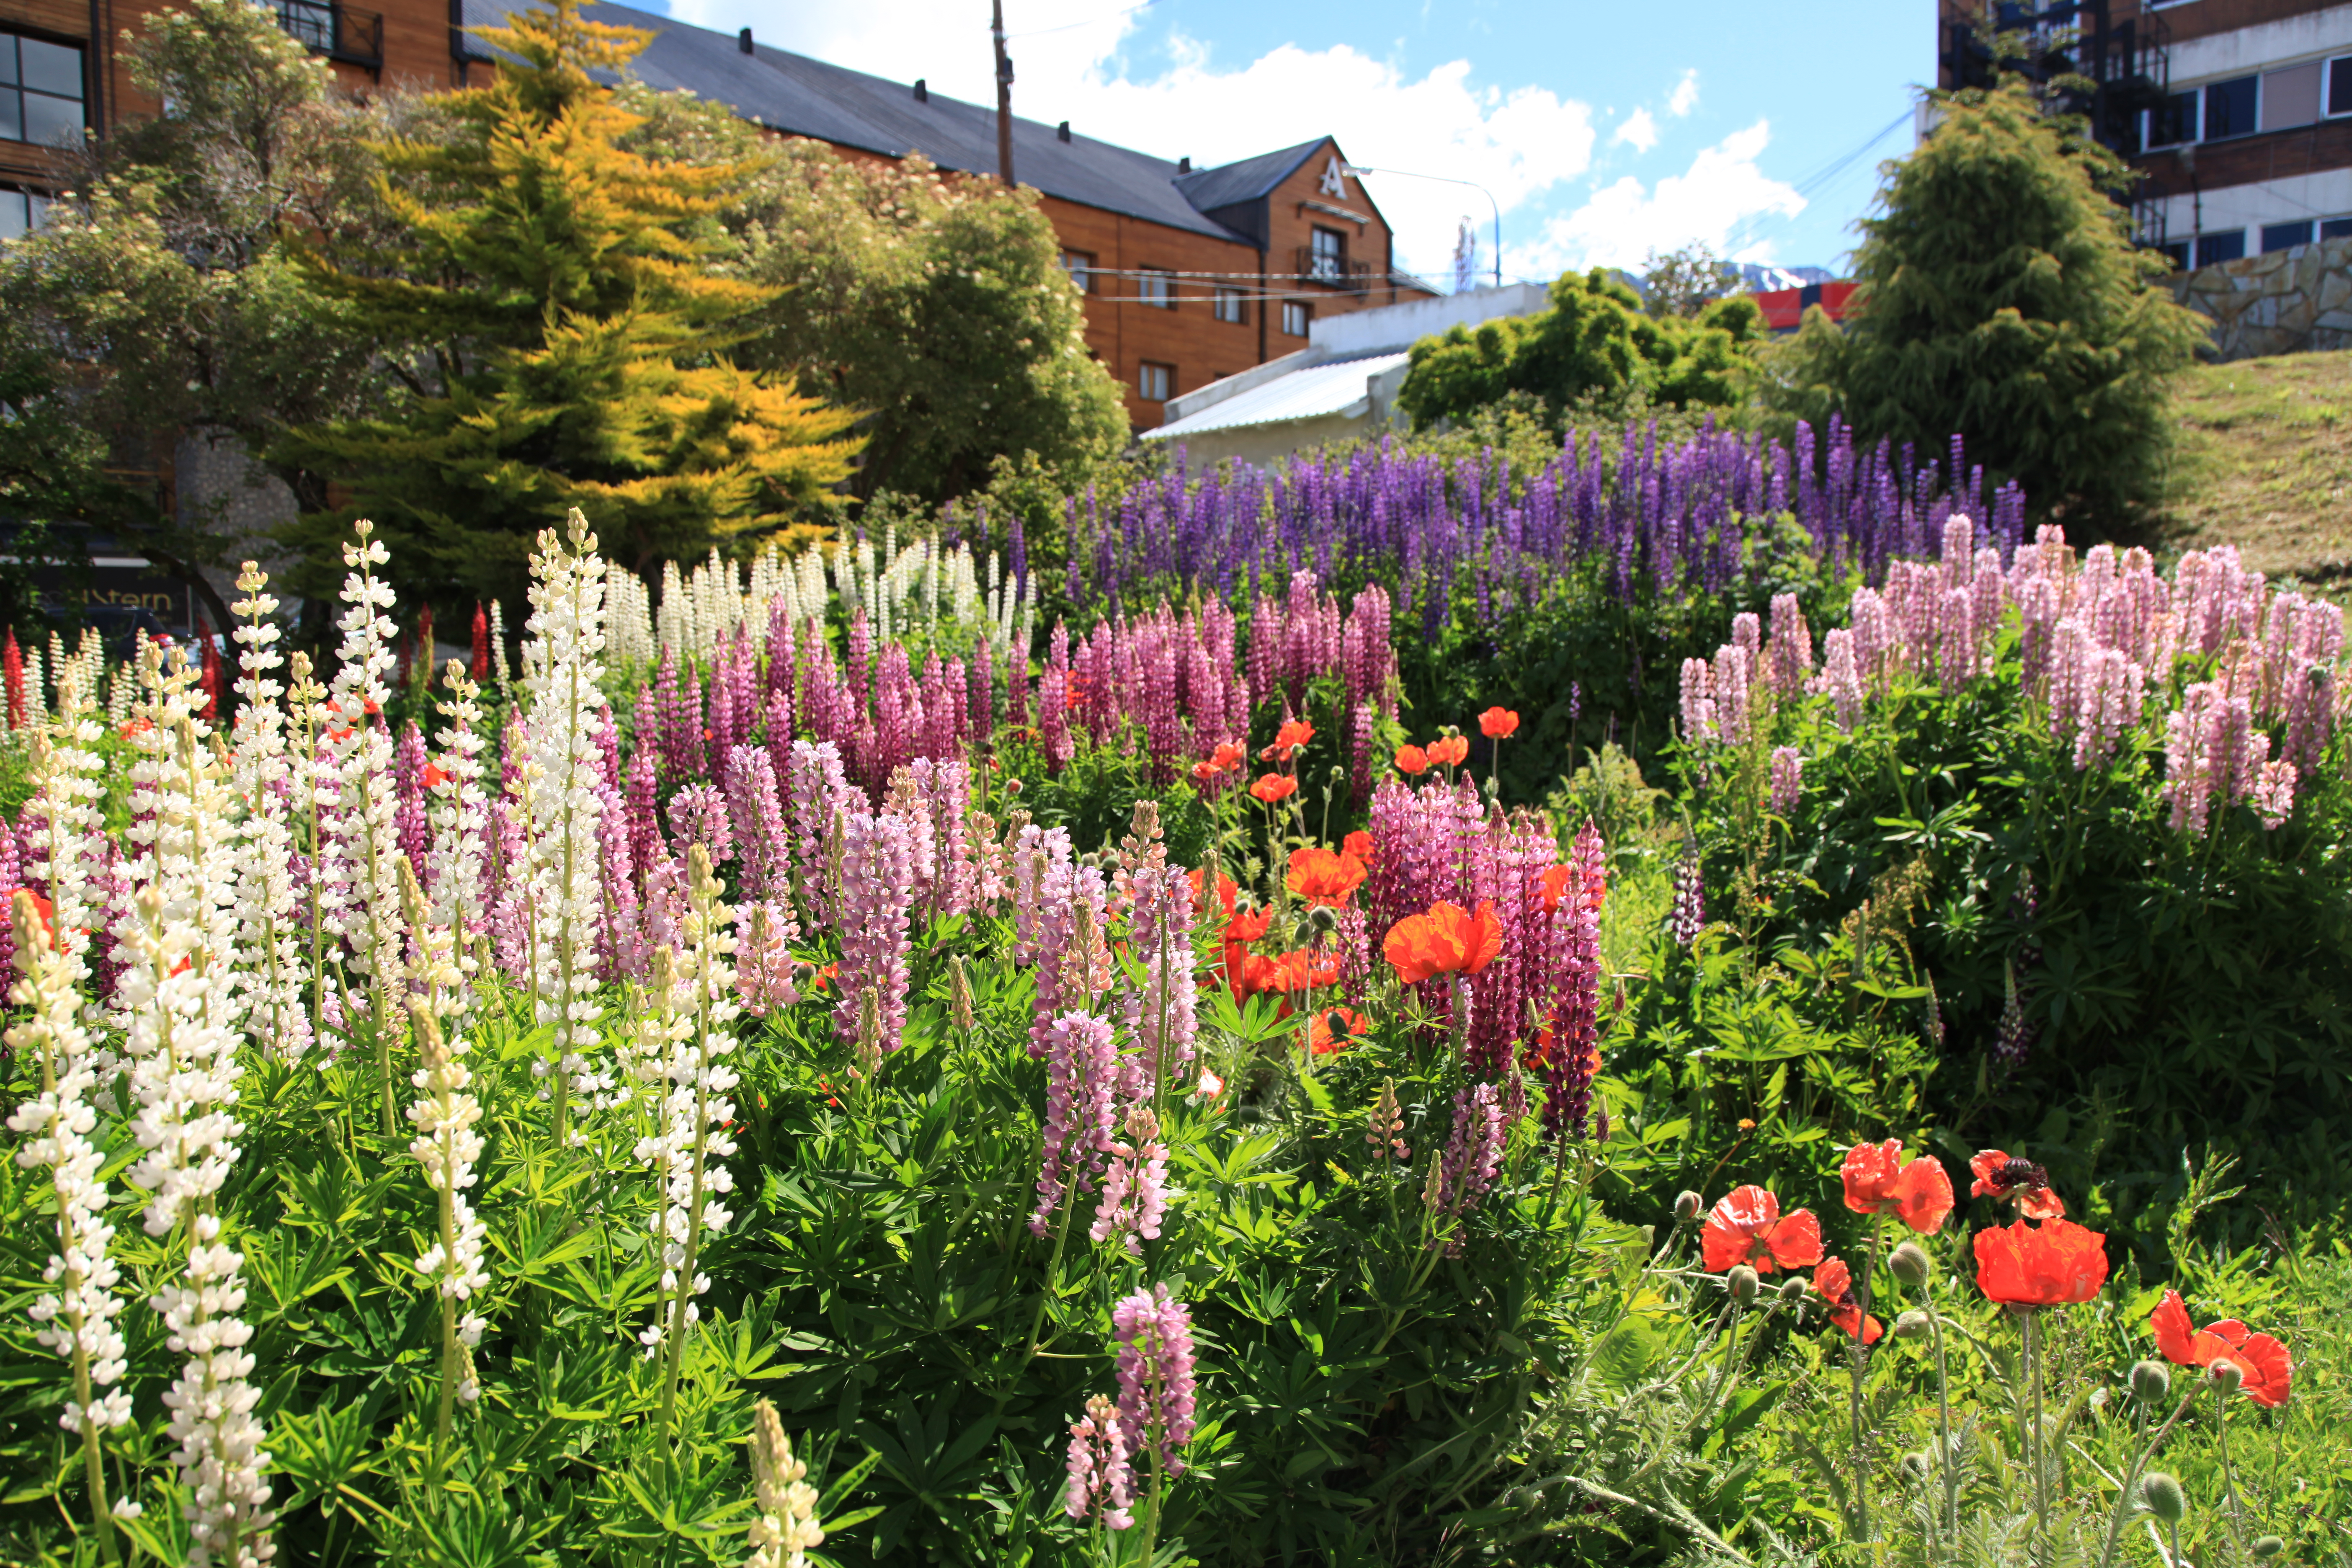 File:Flower garden in Ushuaia (5543010755).jpg - Wikimedia Commons